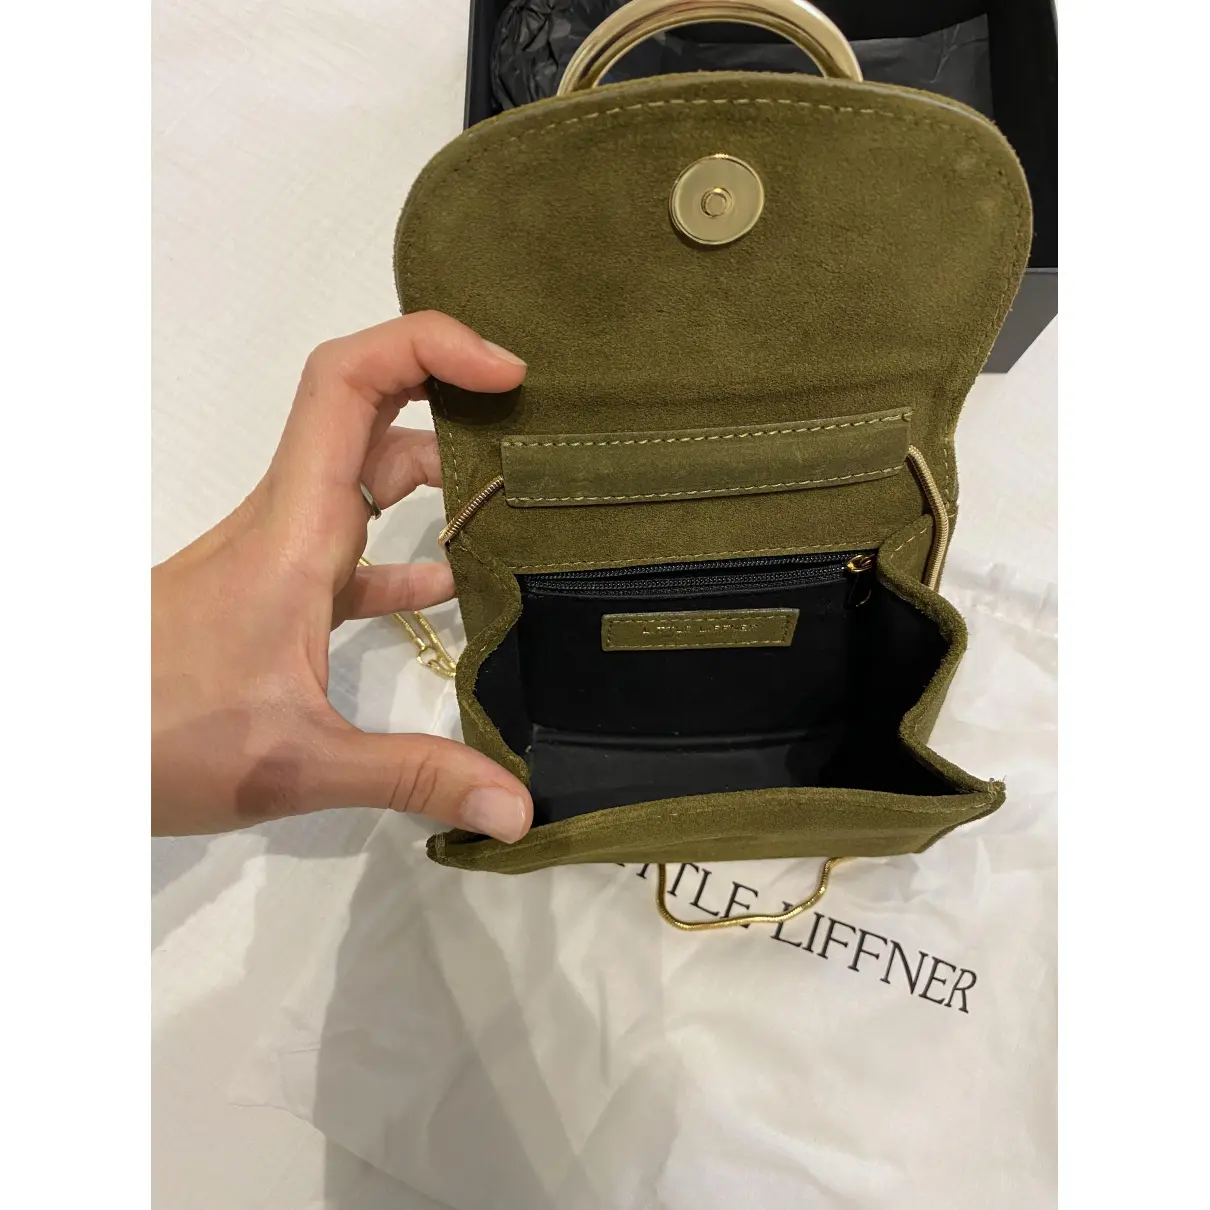 Luxury Little Liffner Handbags Women